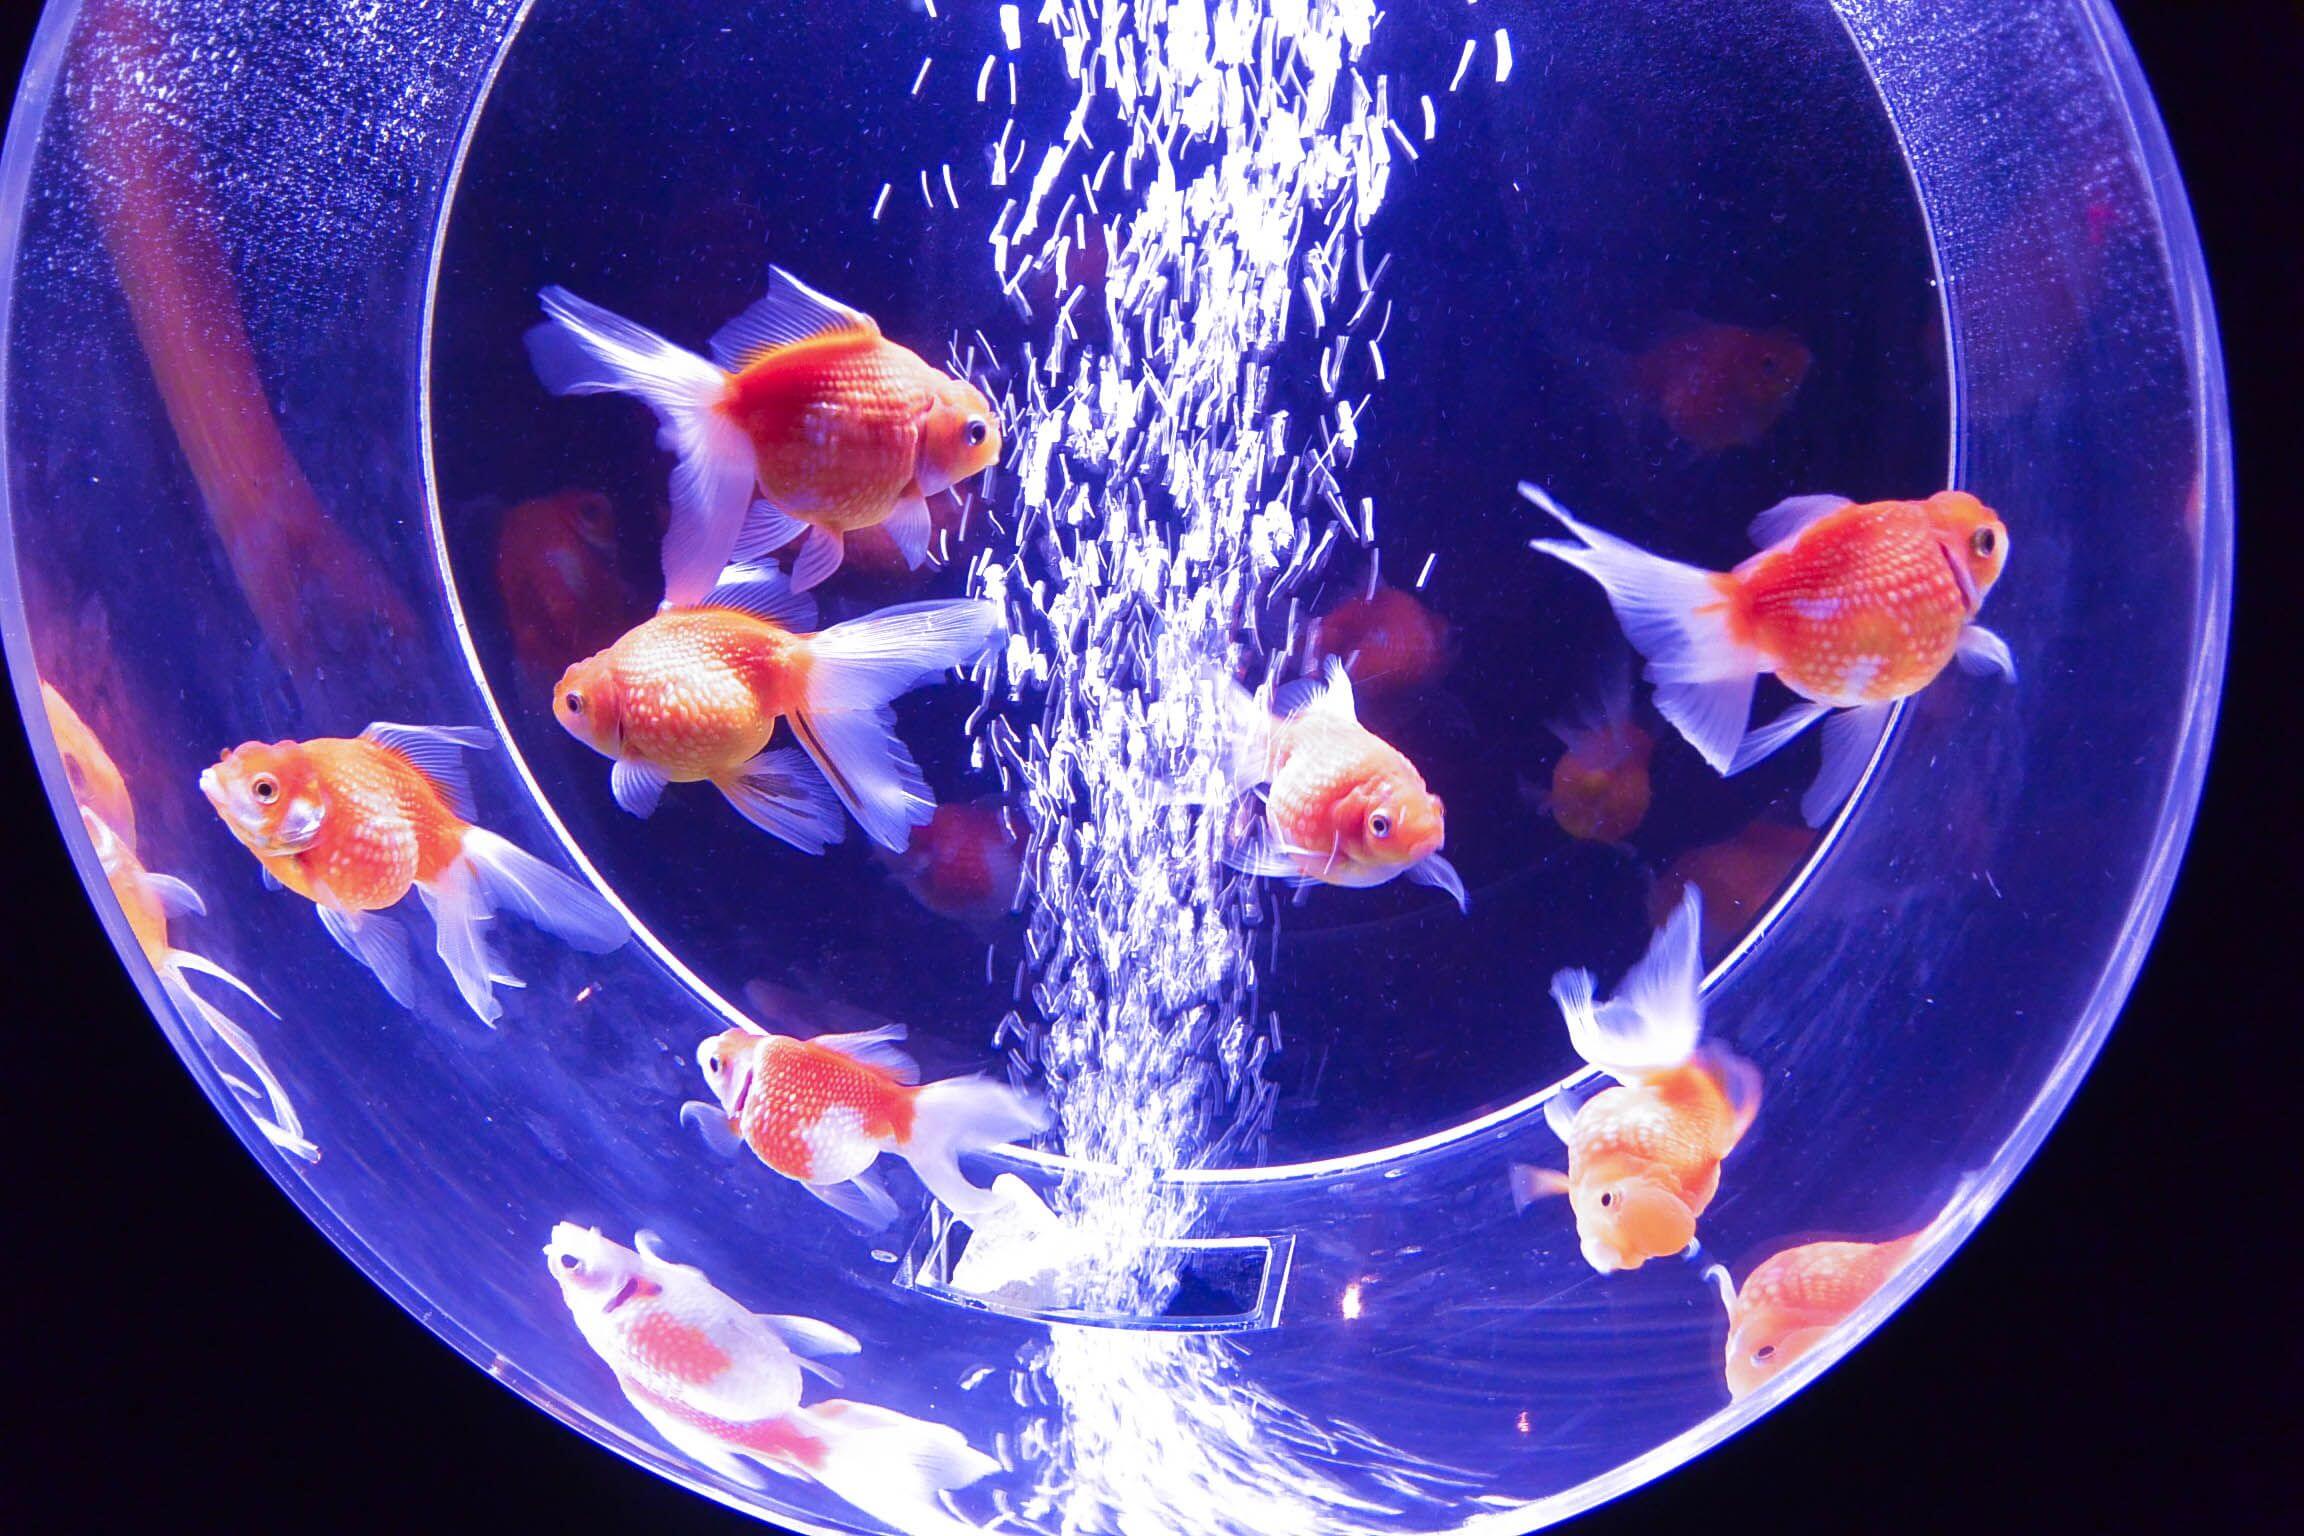 Aquarium Arriving to Kyocera Dome Osaka